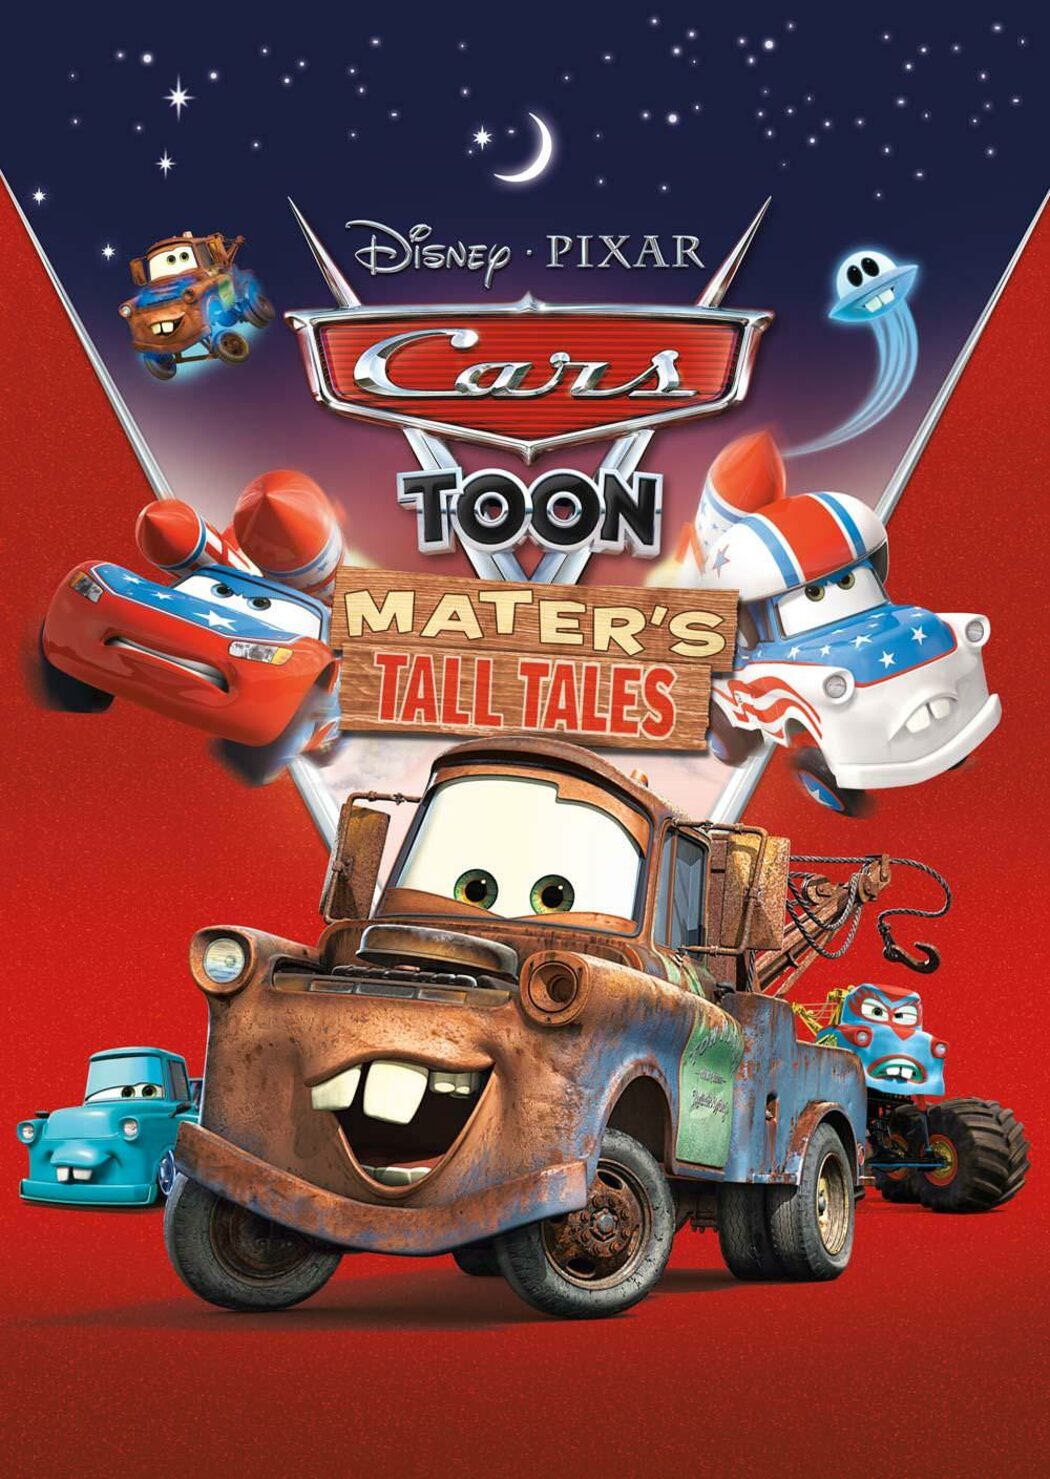 Buy Disney Pixar Cars 2 PC Steam key! Cheap price